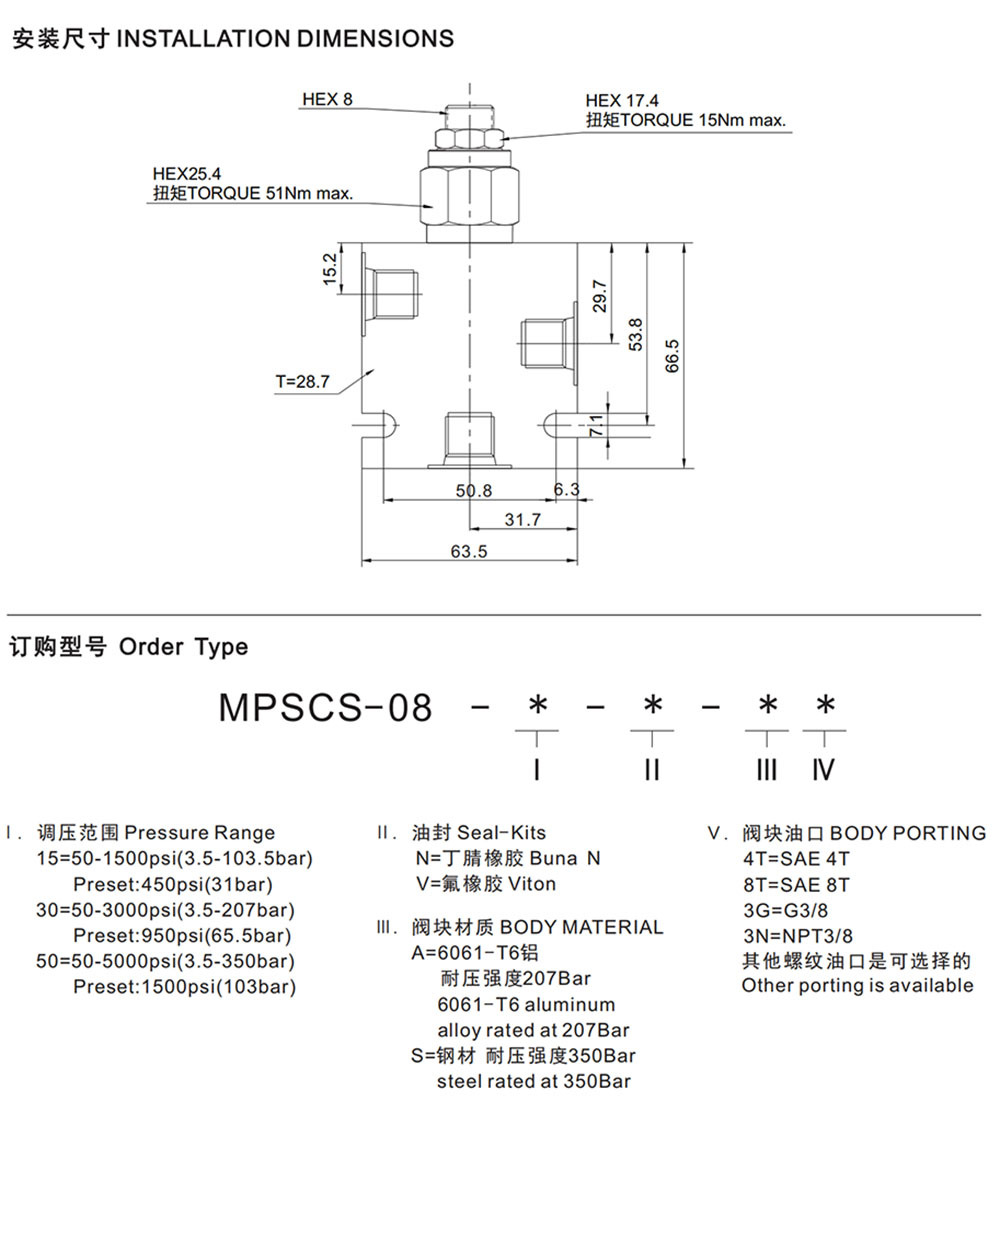 MPSCS-08